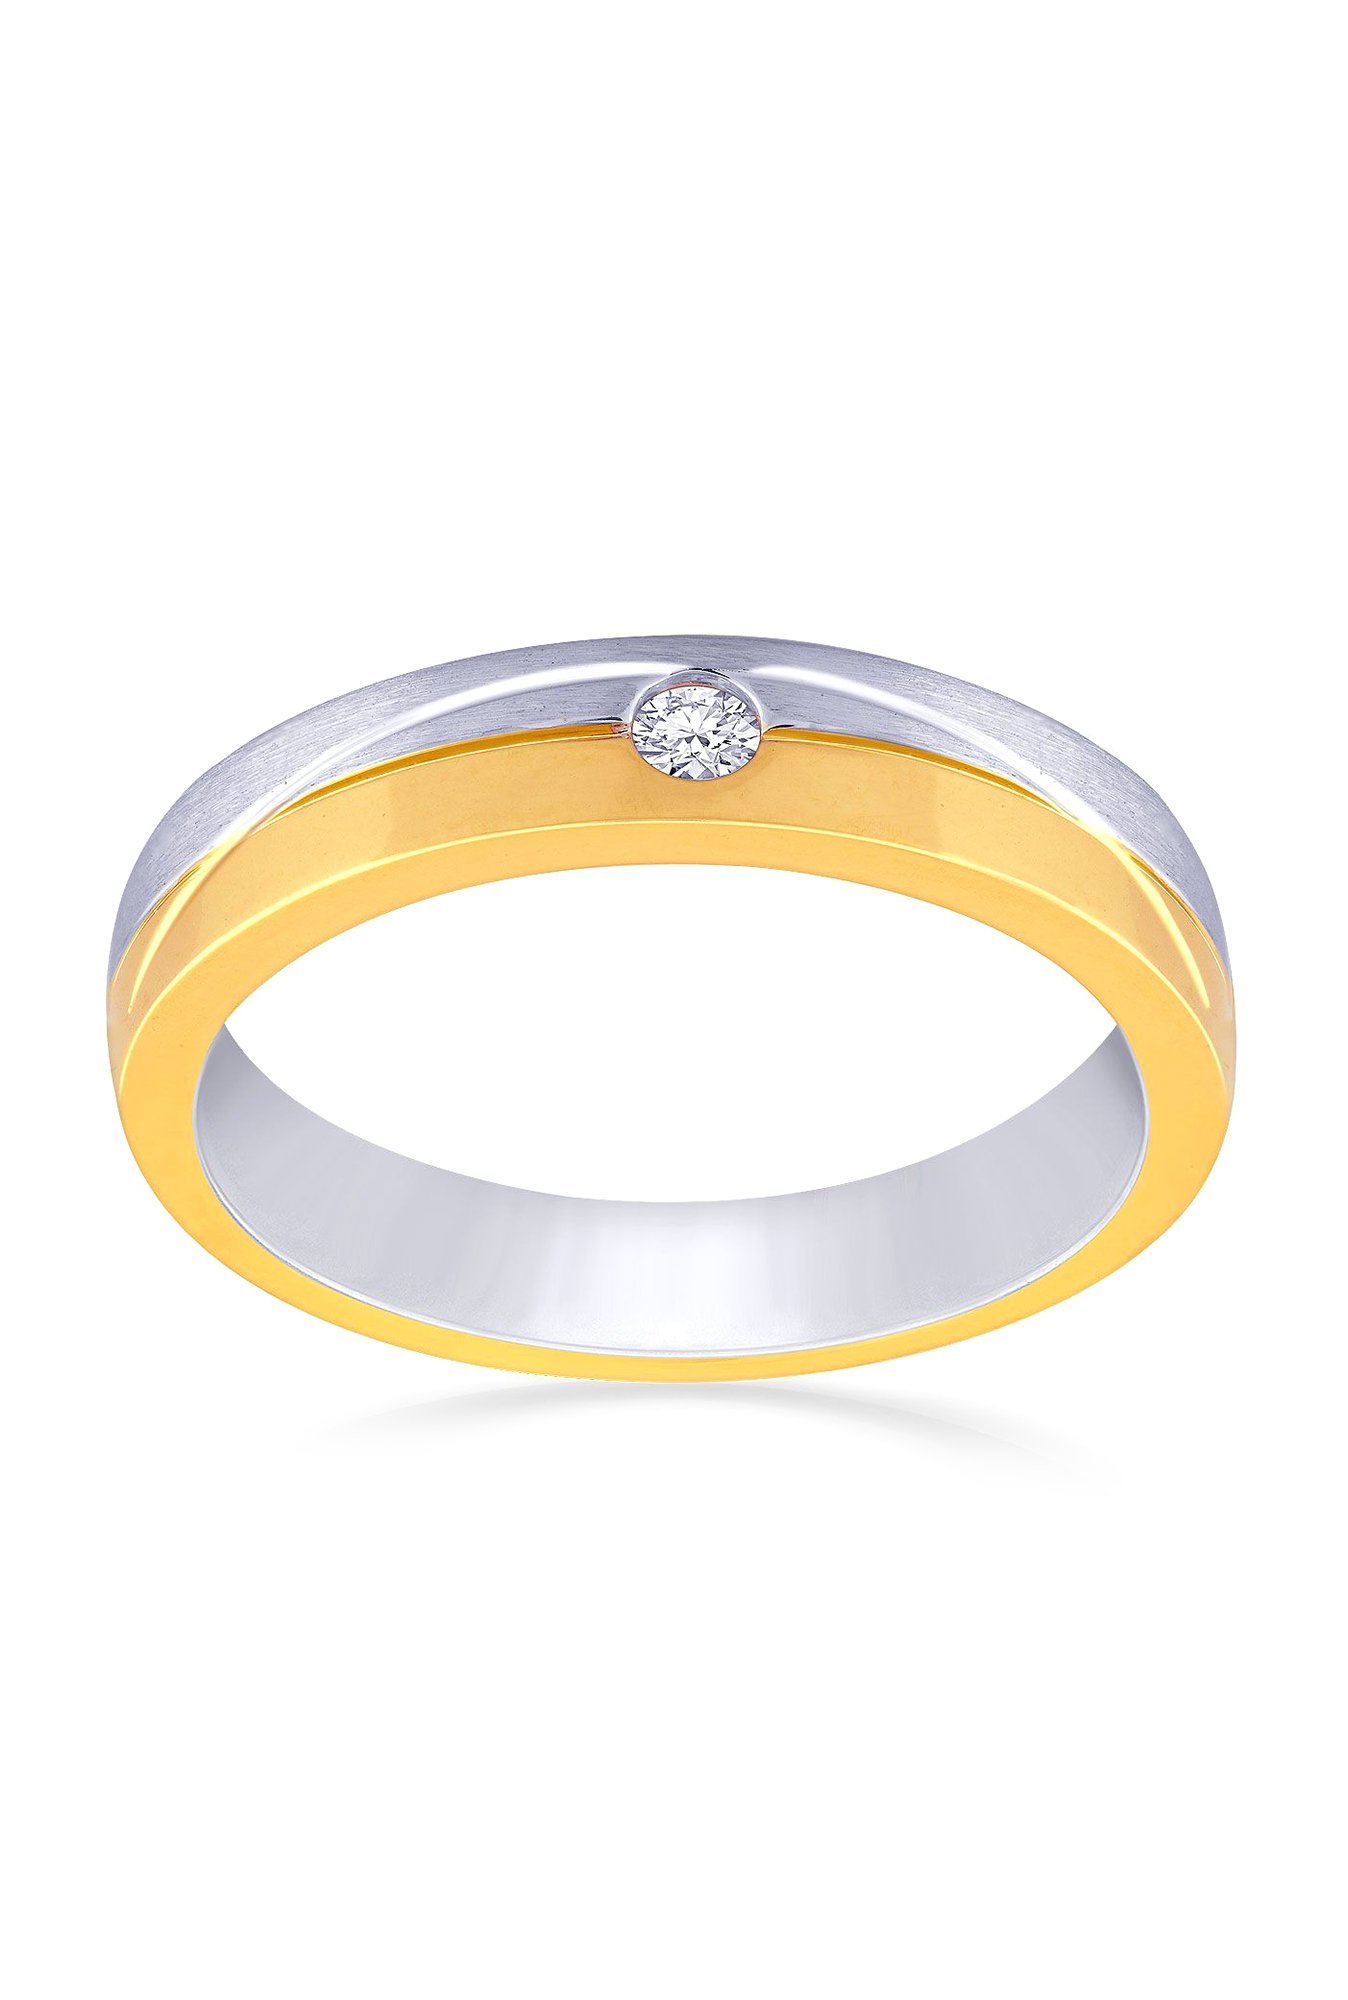 Buy Malabar Gold Ring FRDZL50064 for Women Online | Malabar Gold & Diamonds